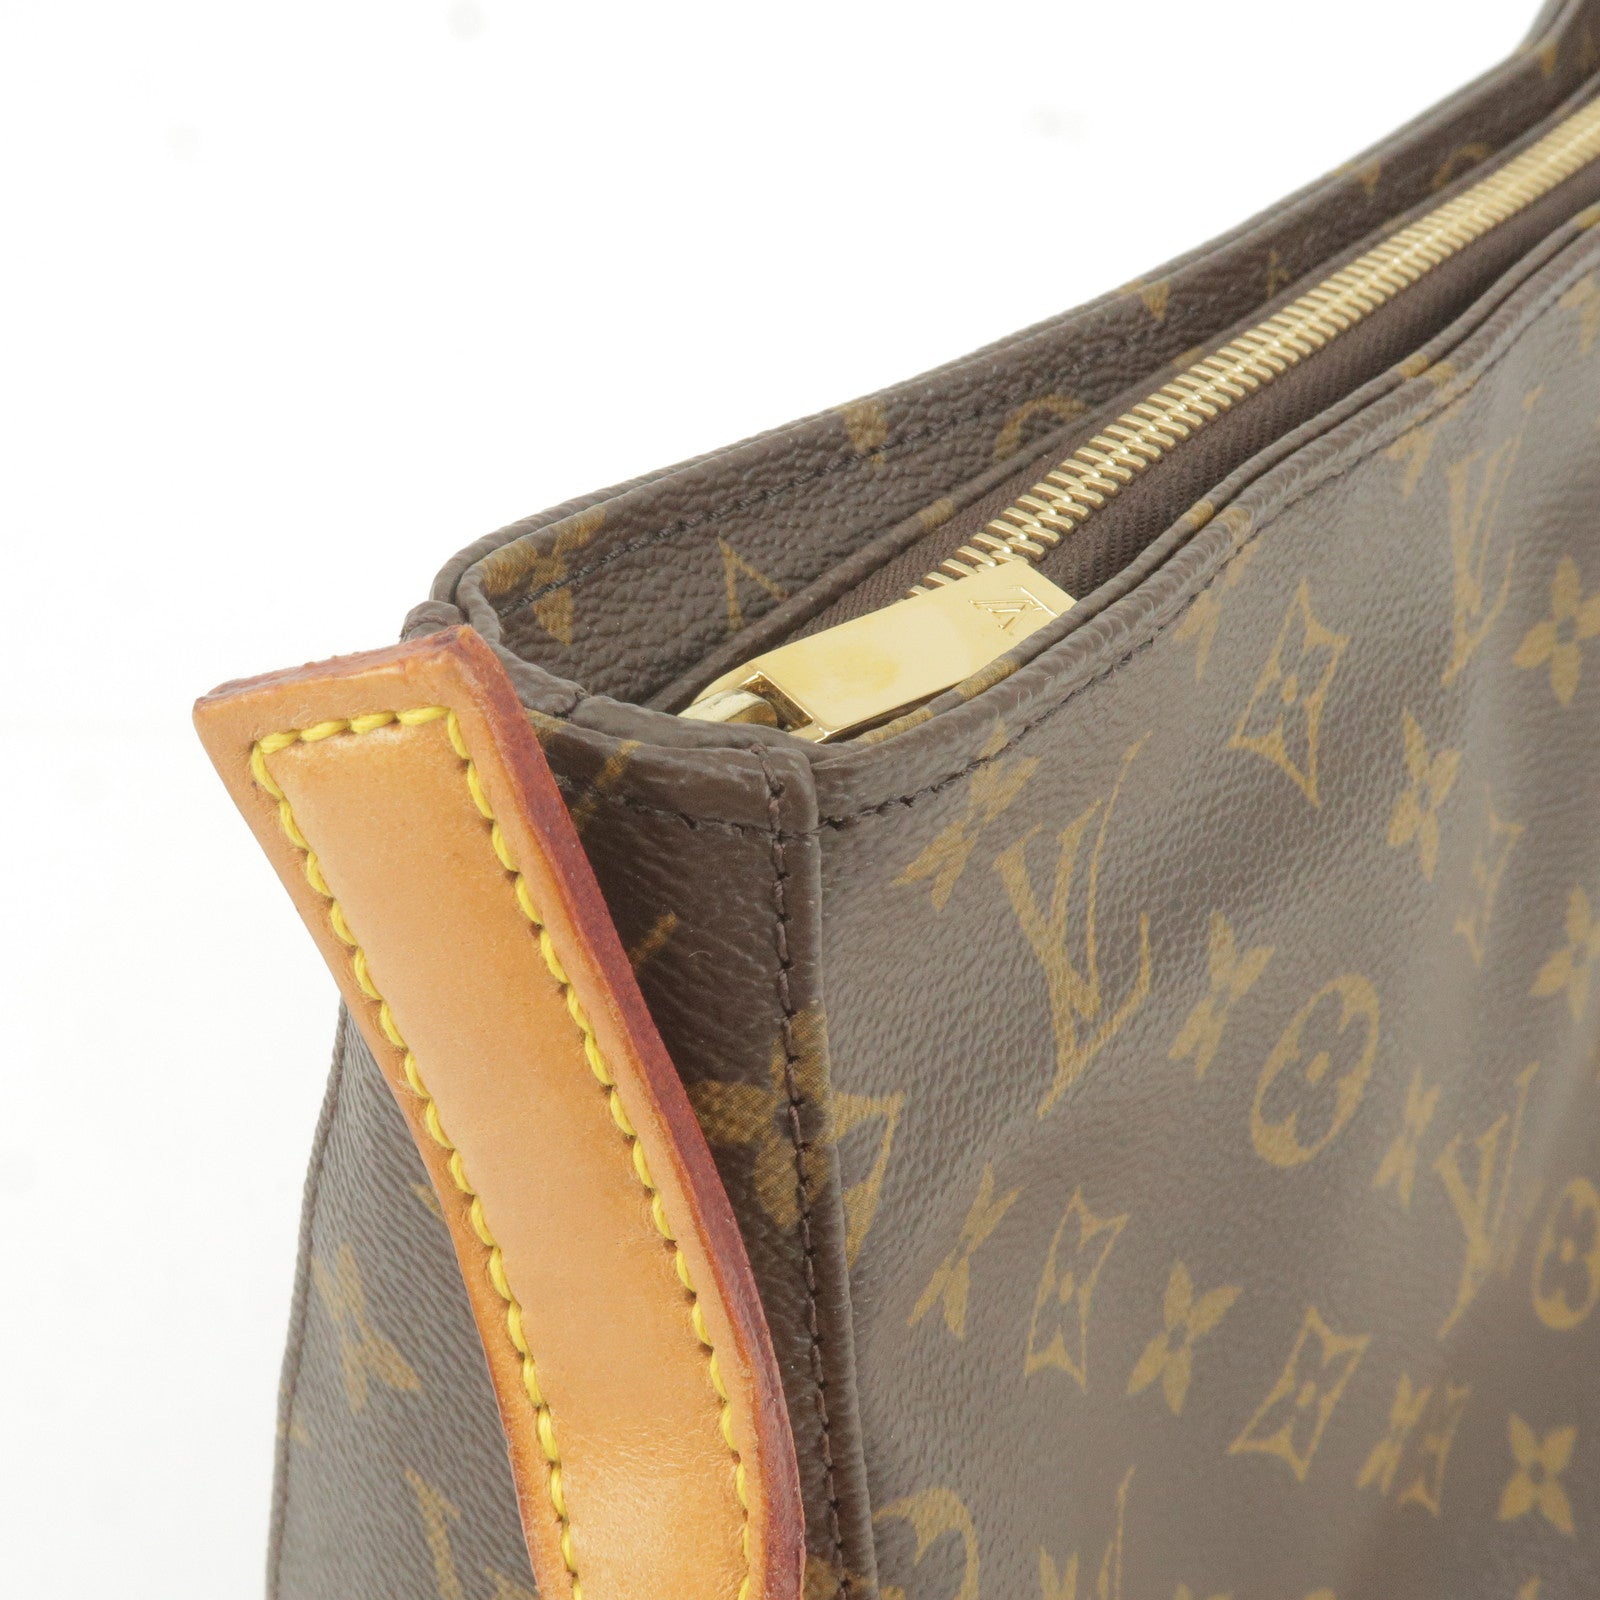 Auth Louis Vuitton Monogram Looping MM M51146 Women's Shoulder Bag